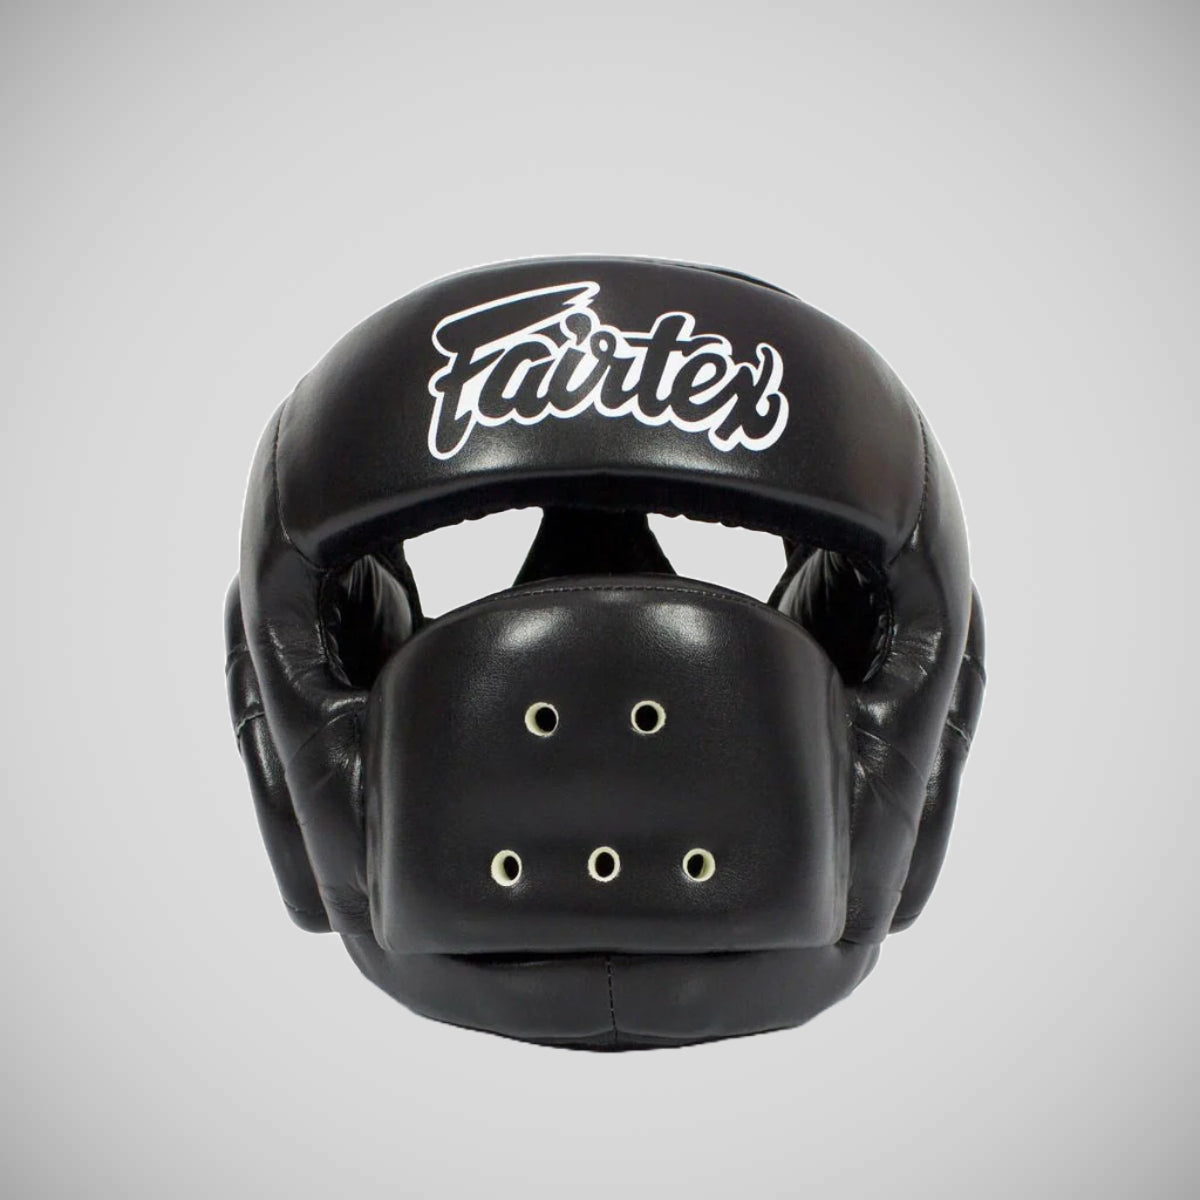 Fairtex HG14 Full Face Head Guard Black